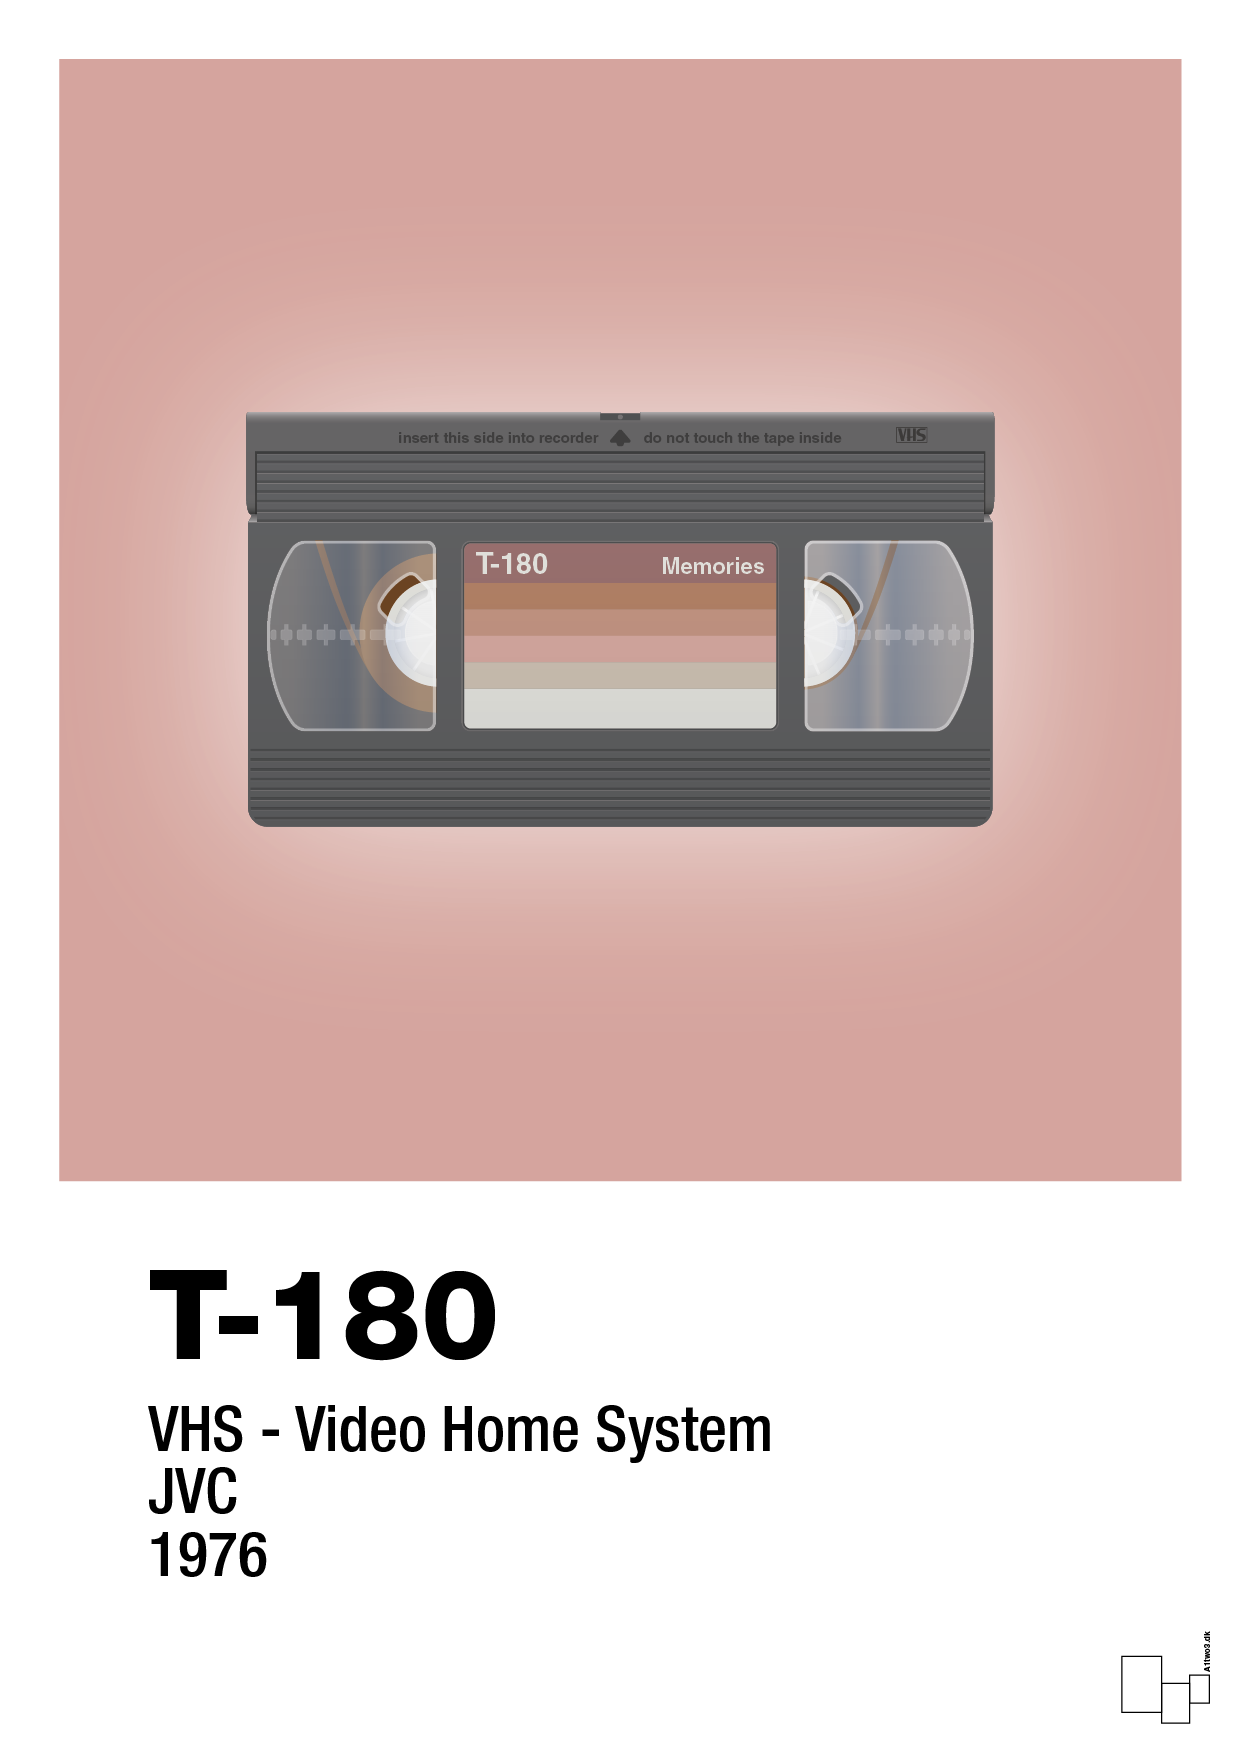 videobånd t-180 - Plakat med Grafik i Bubble Shell